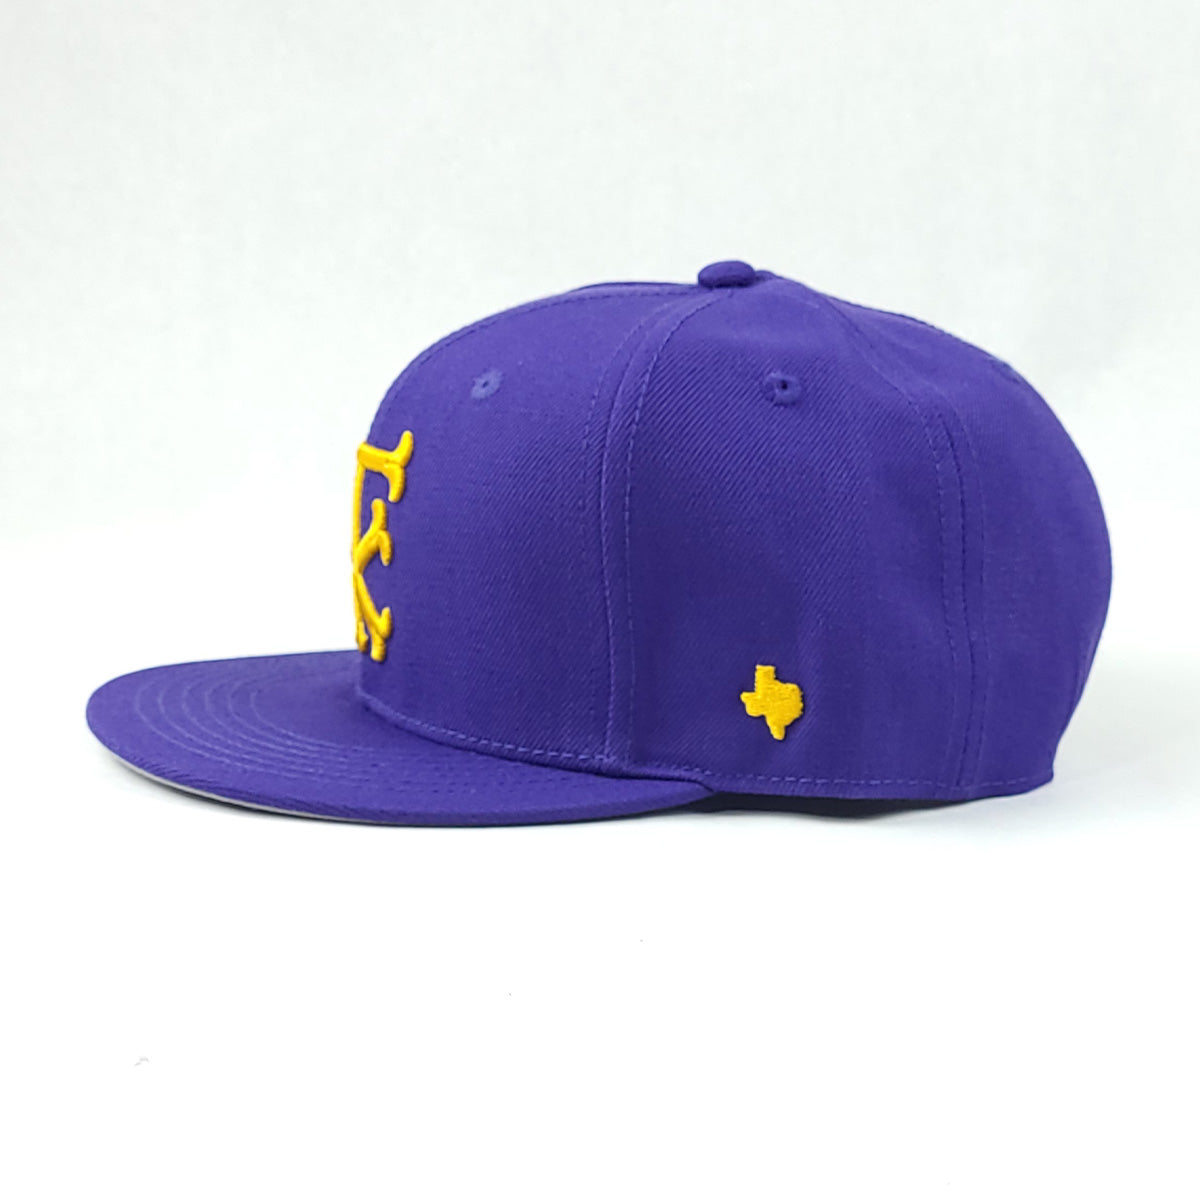 Snapback hat, Facebook, Purchase, Addtocart, TXhat, Texas Hat, New era, 59Fifty, PVAMU, Lakers, Google Shopping